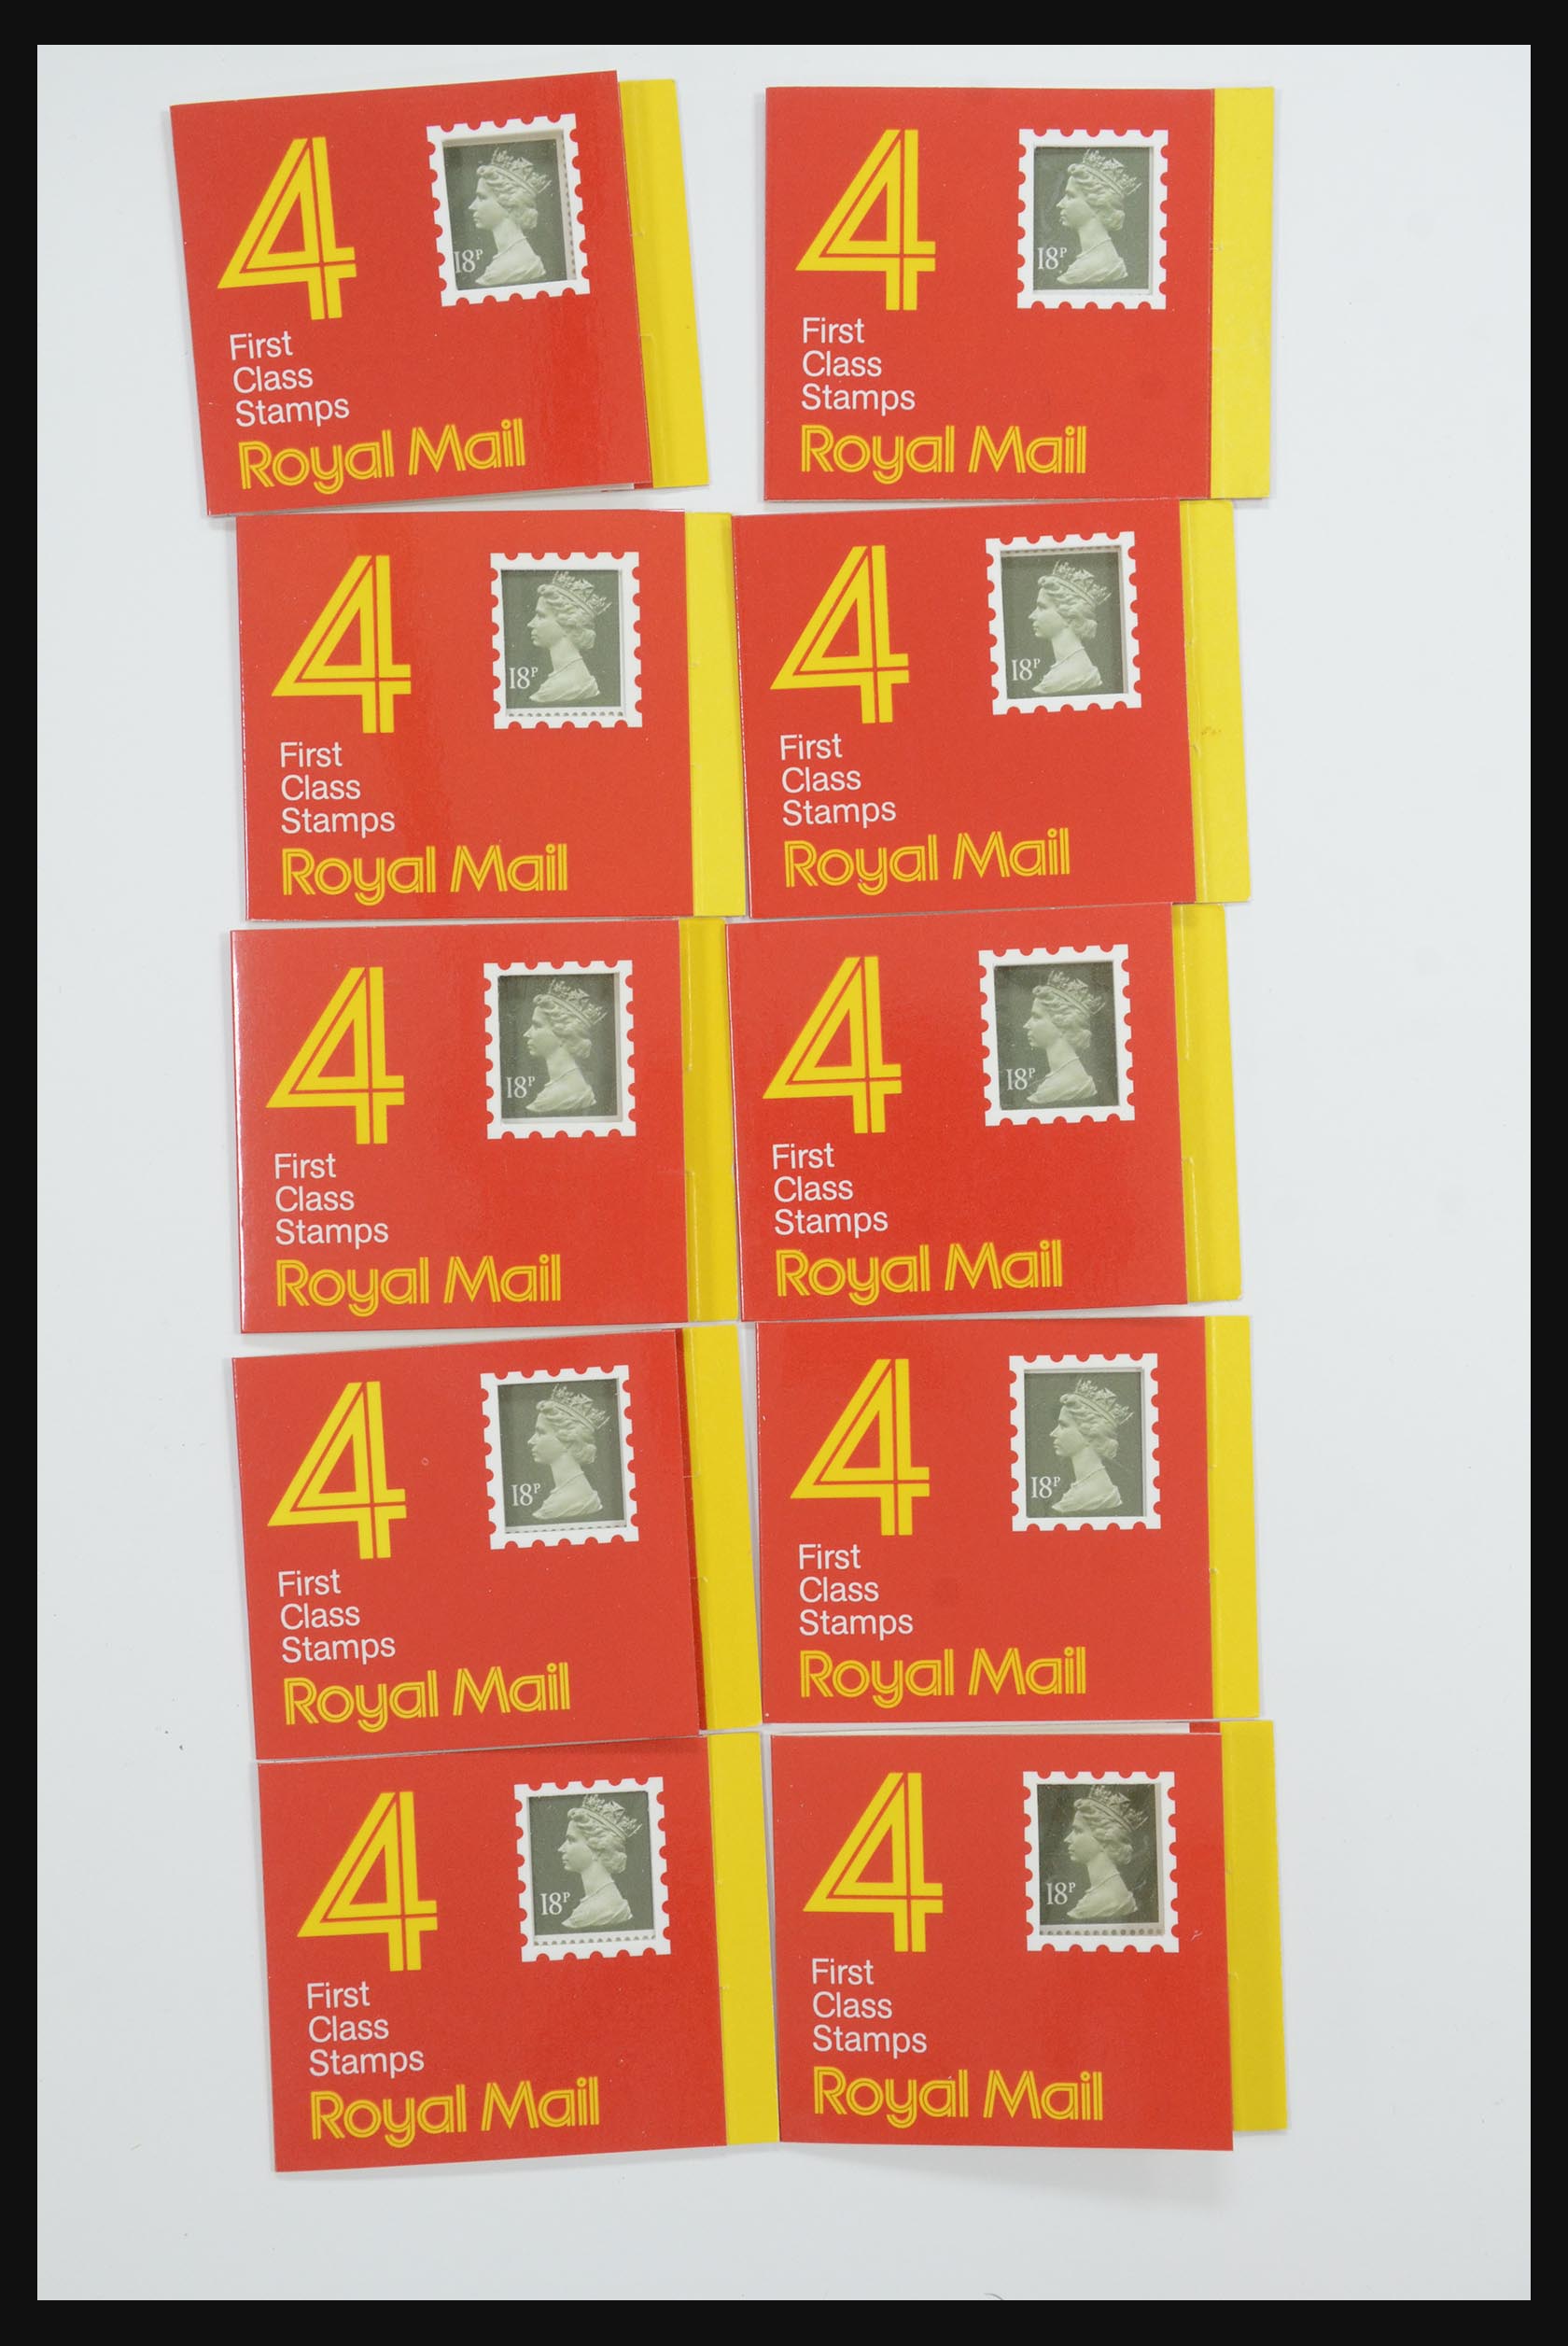 31961 053 - 31961 Great Britain stampbooklets 1971-1999.